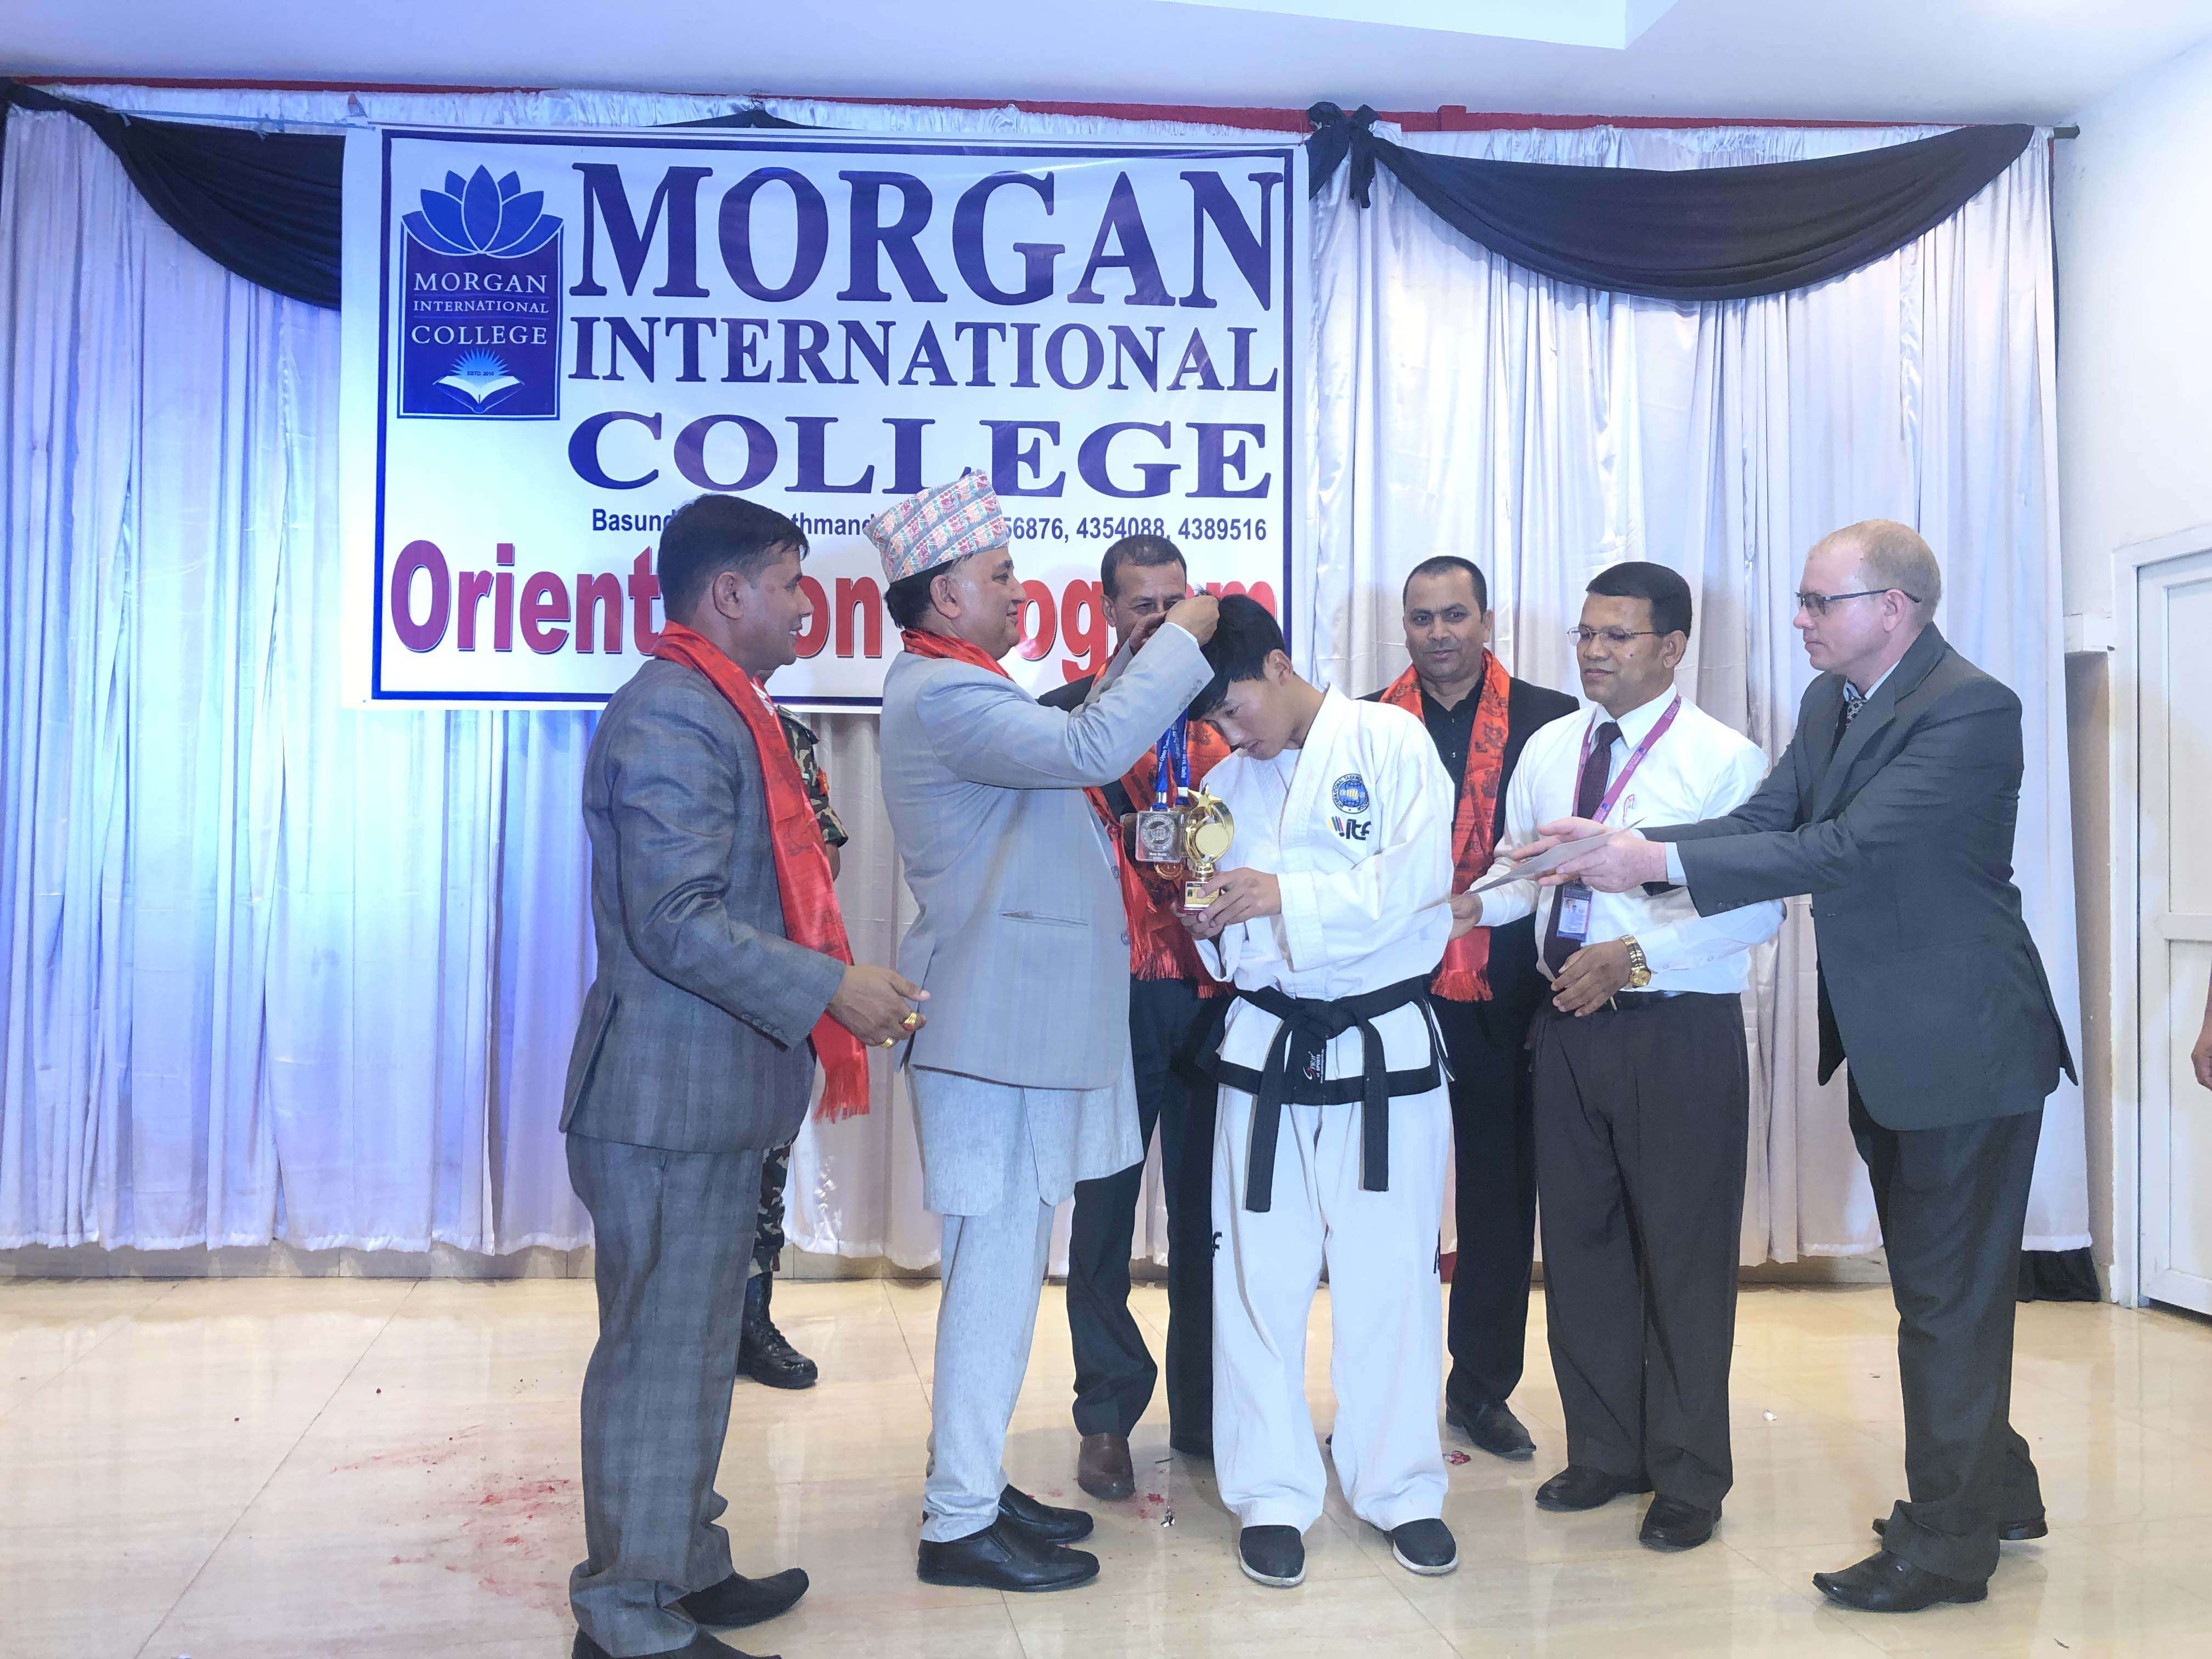 Morgan International College